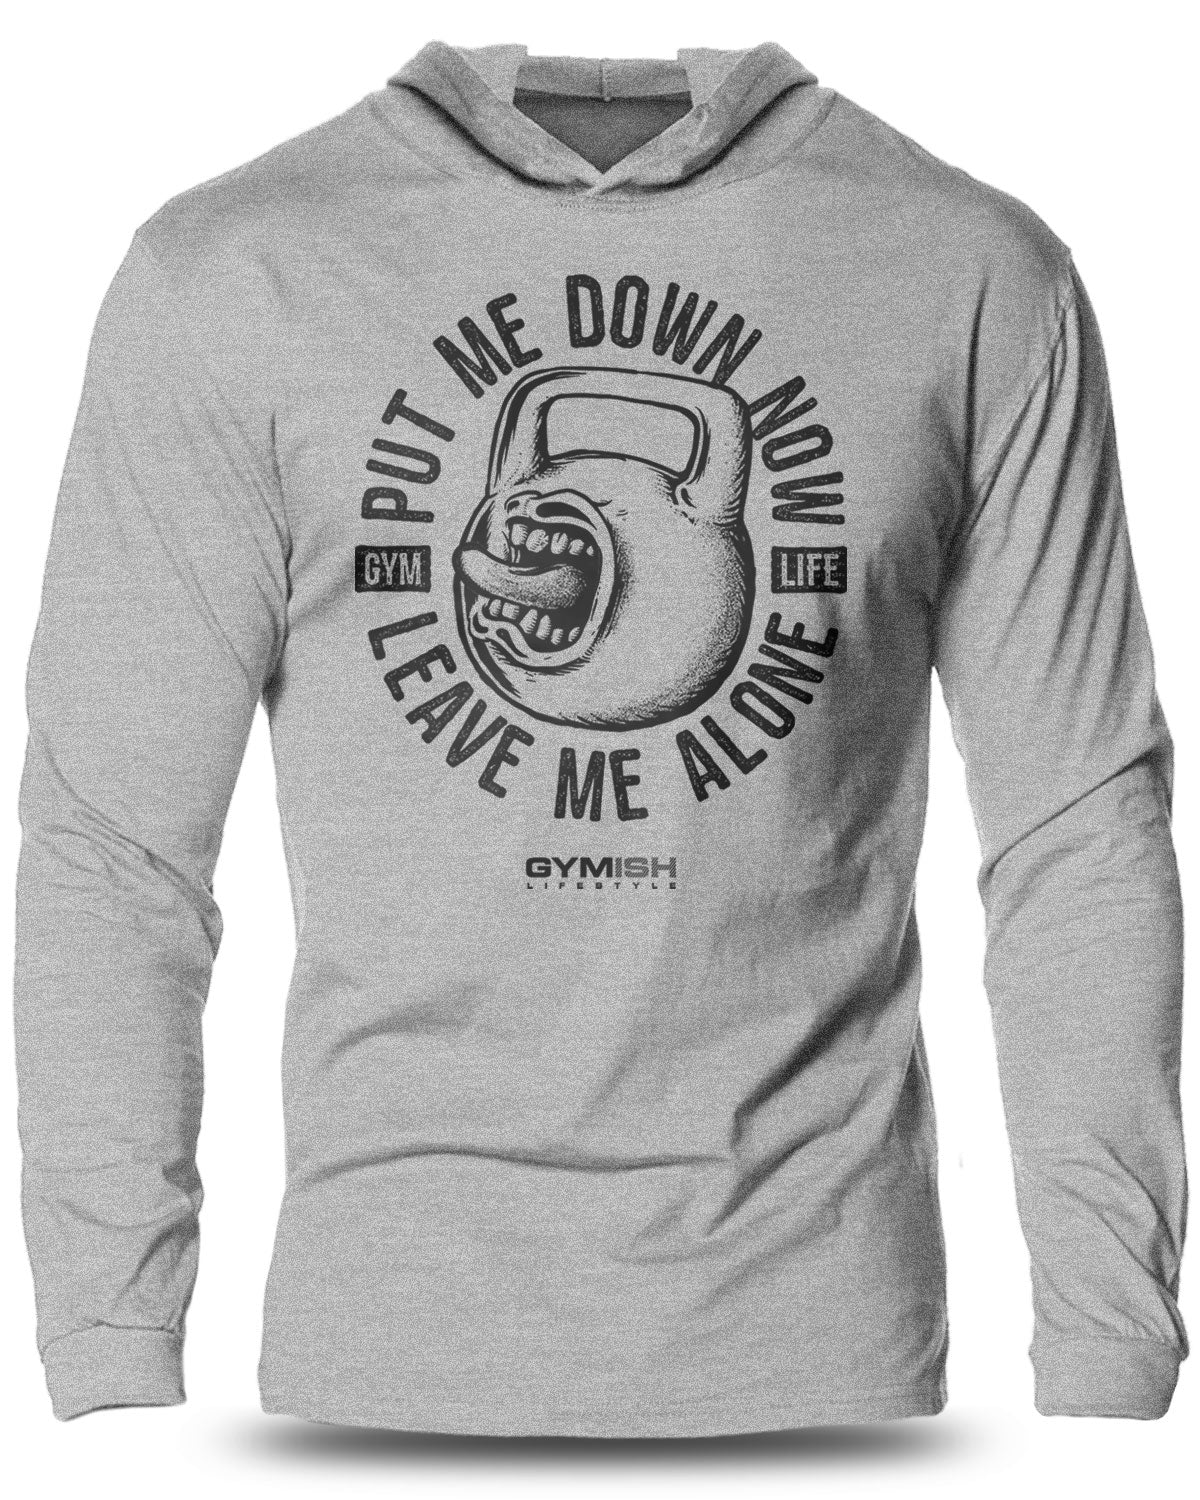 052- Put Me Down Now Lightweight Long Sleeve Hooded T-shirt for Men